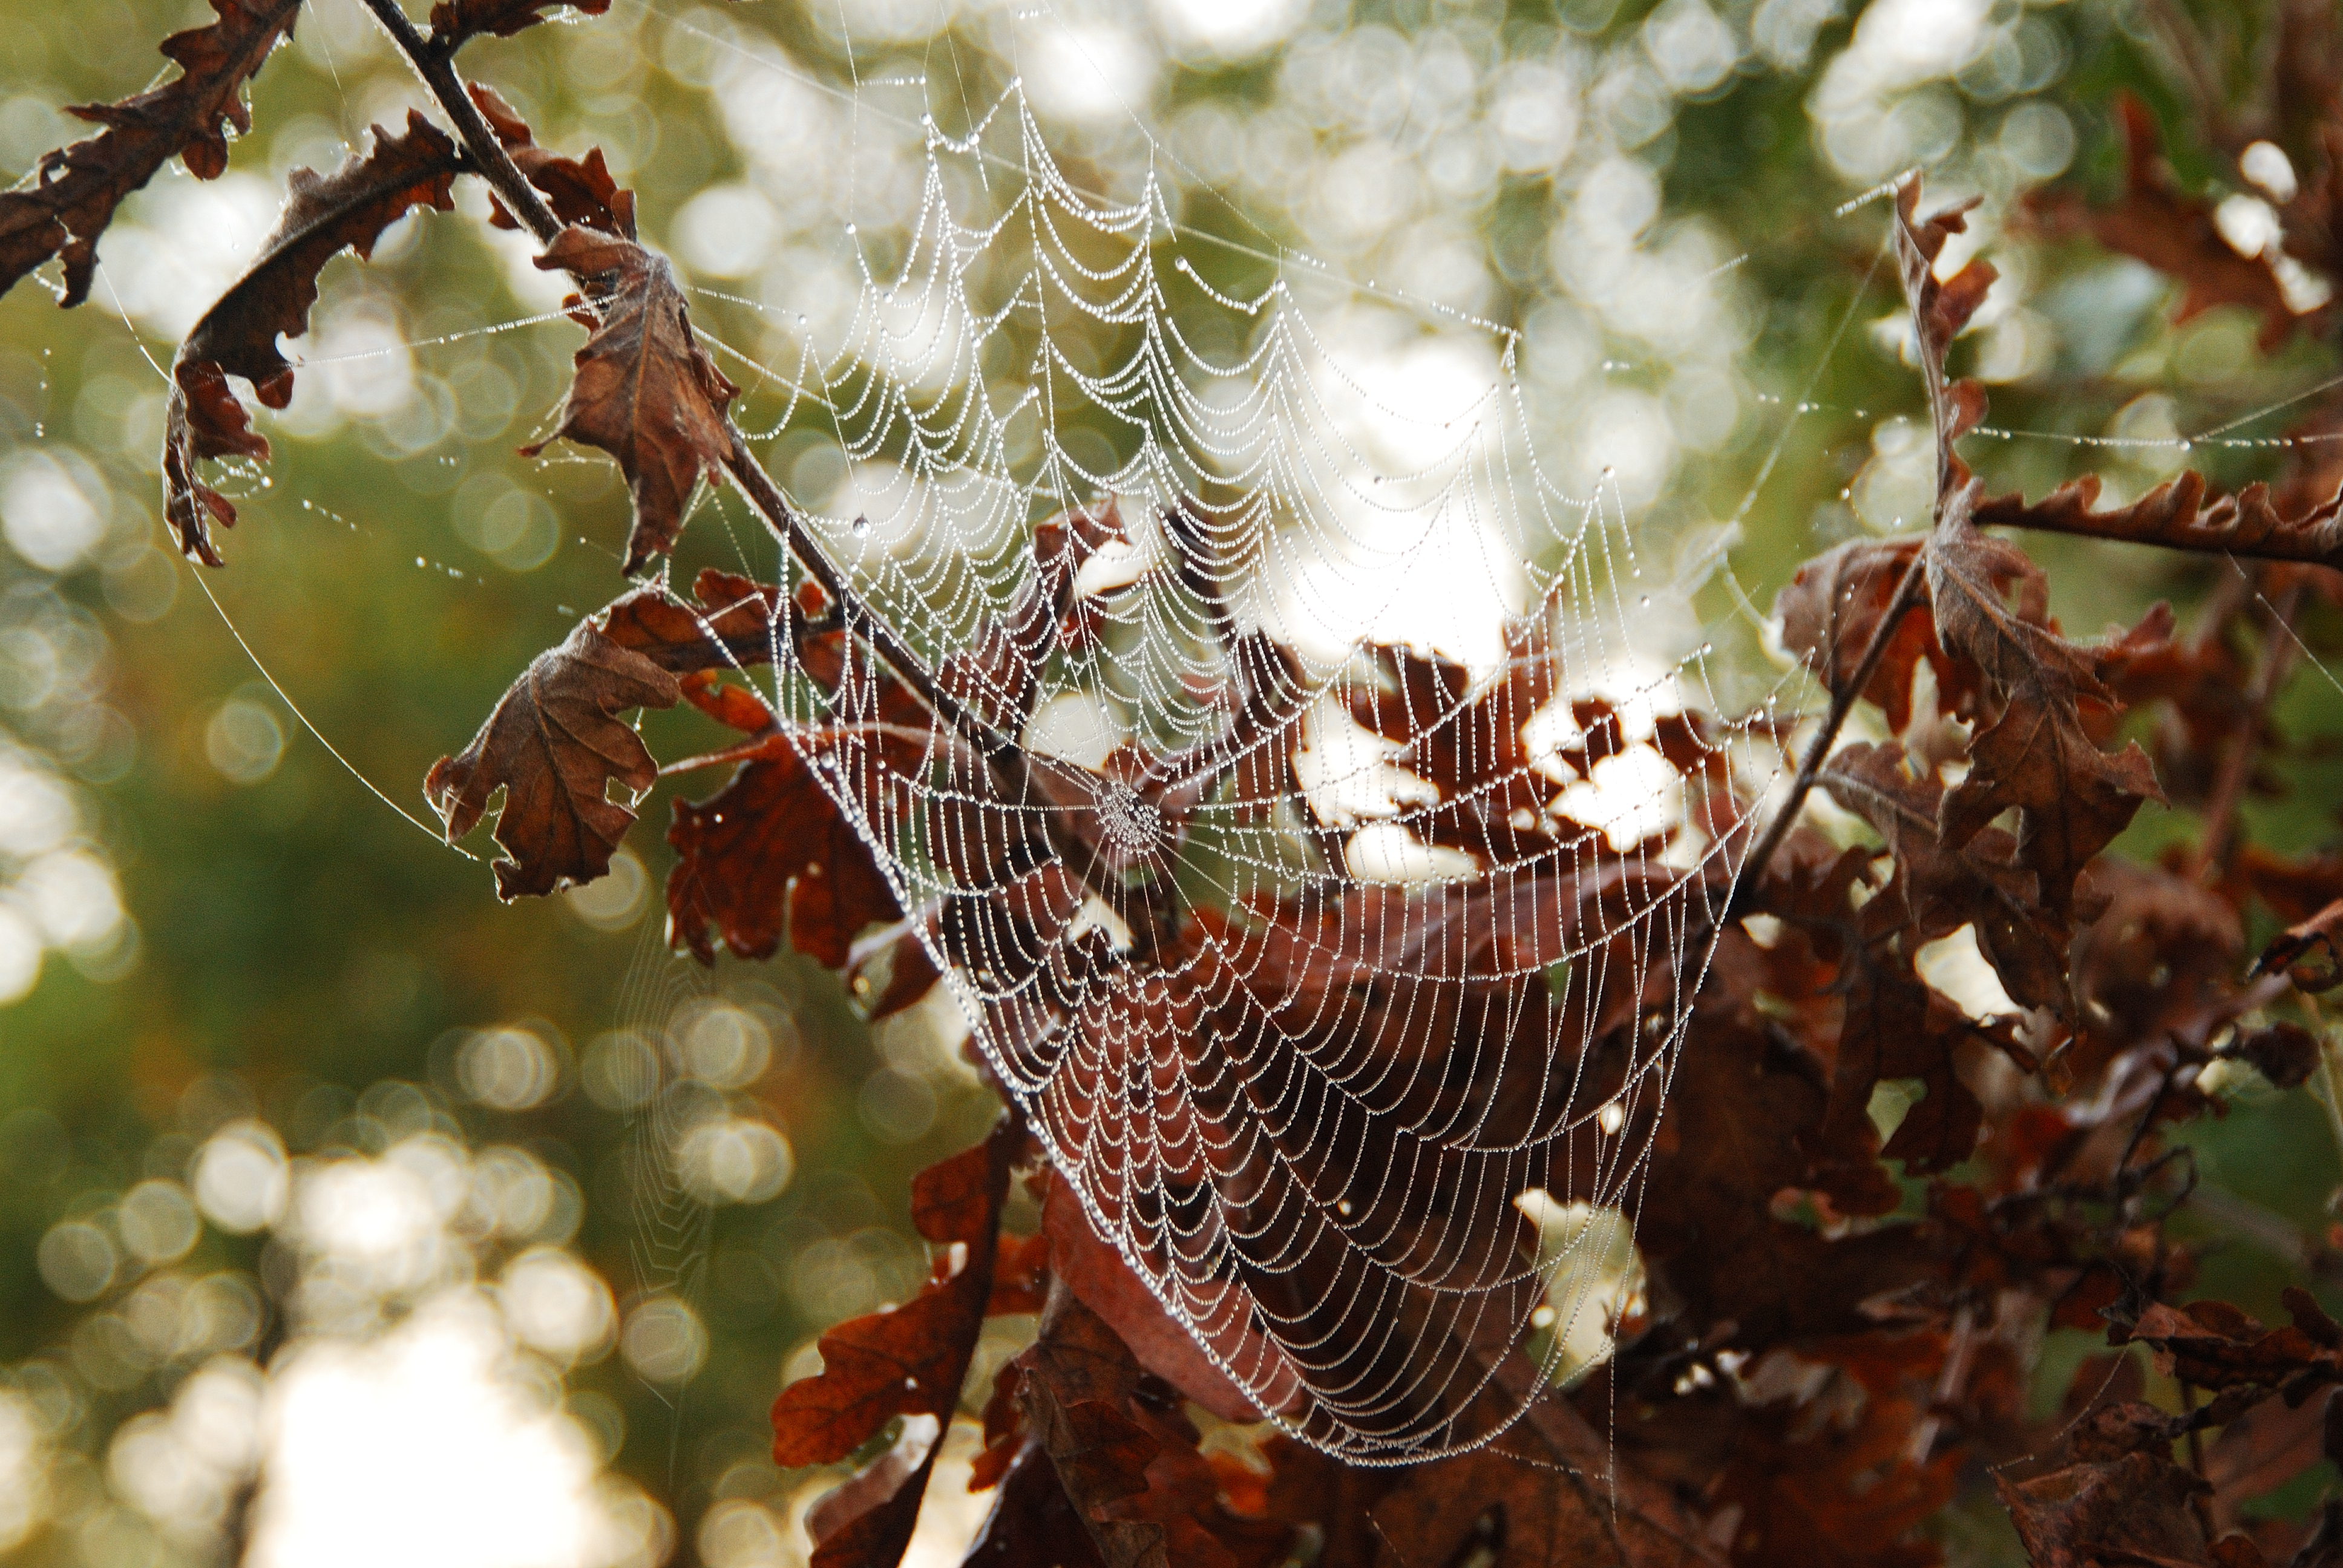 Spider web in Medjugorje vineyard